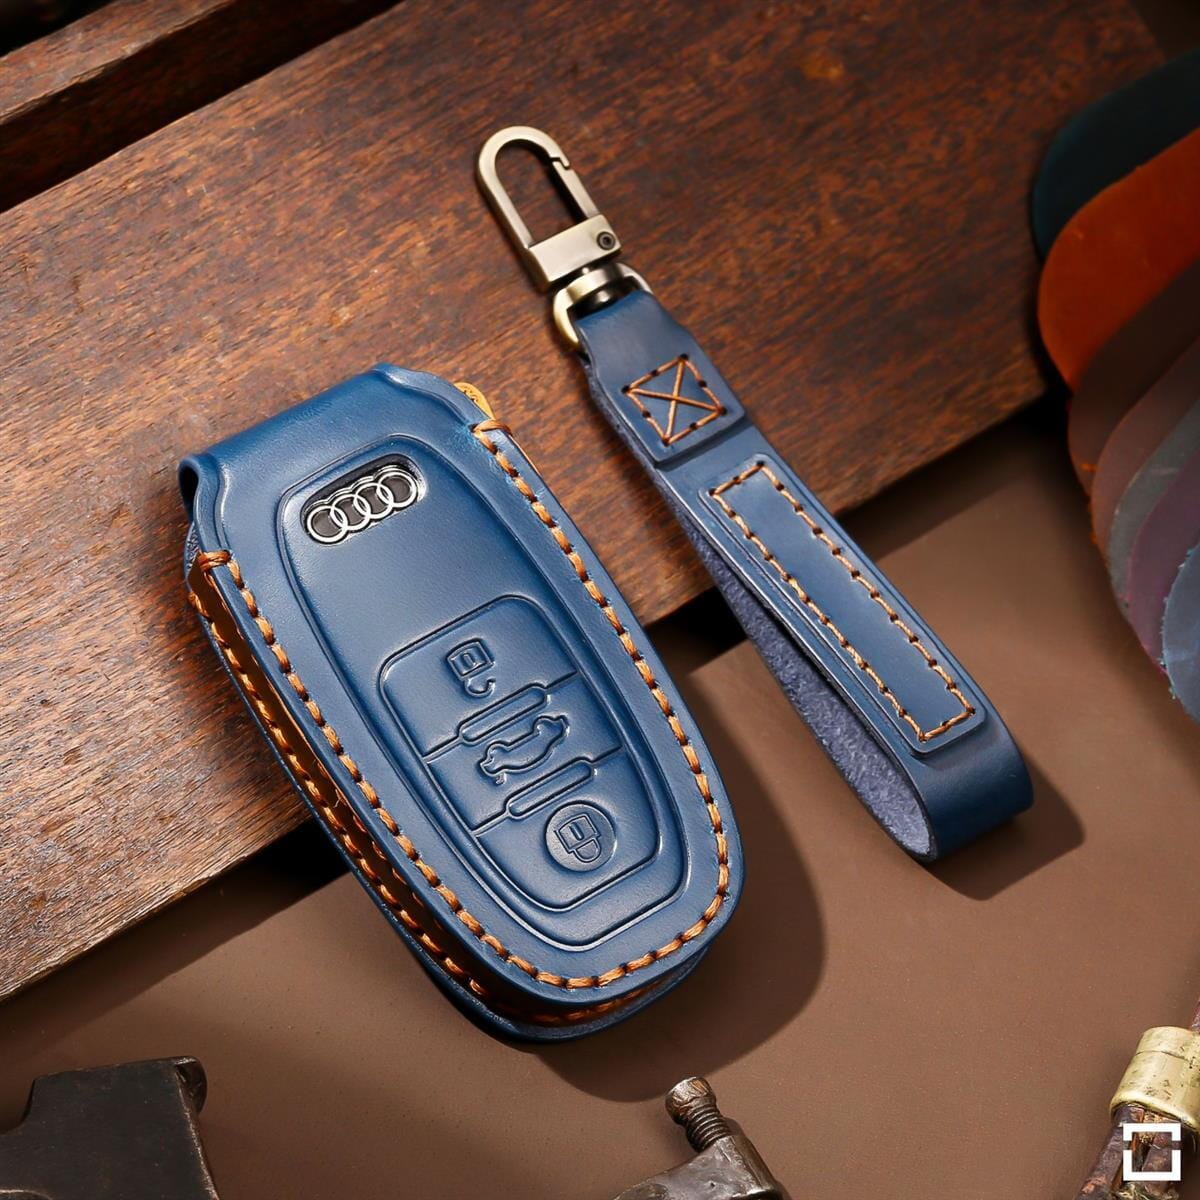 Premium Leder Schlüsselhülle / Schutzhülle (LEK64) passend für Audi Schlüssel inkl. Karabiner + Lederband keyholster.com | the case company blau 